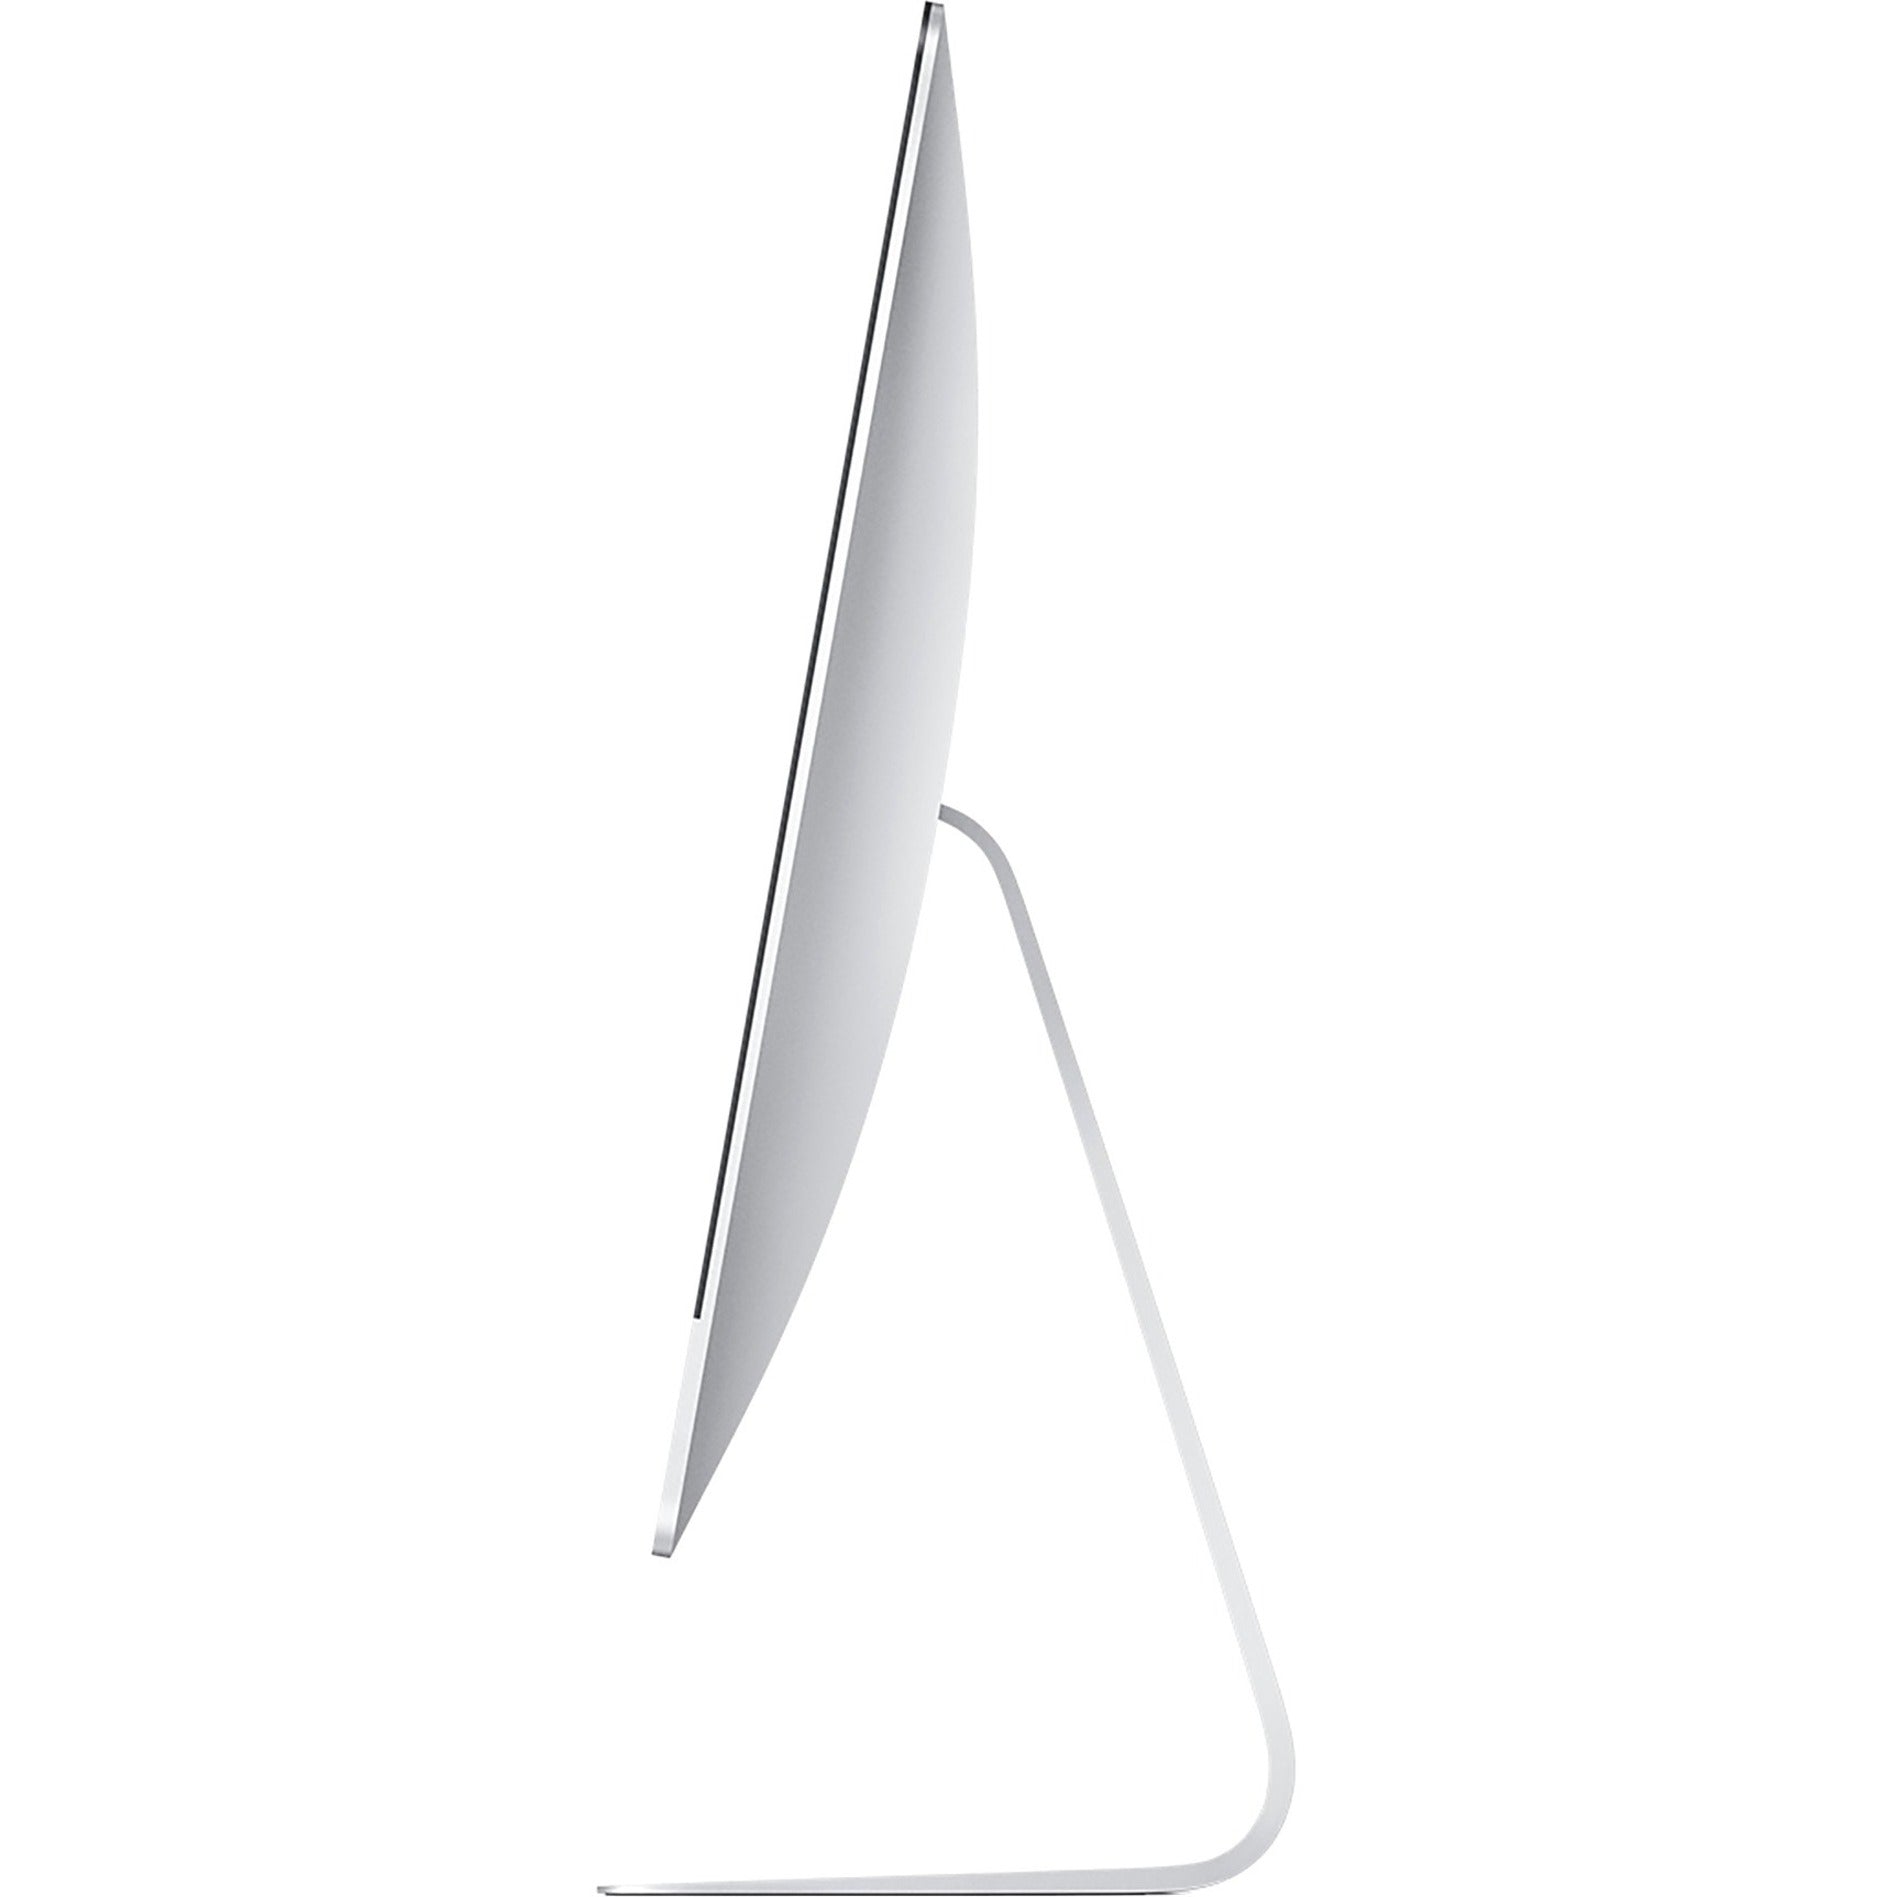 Apple MNE92LL/A 27-inch iMac with Retina 5K display, 3.4QC, 8GB RAM, 1TB FD, RP570 US